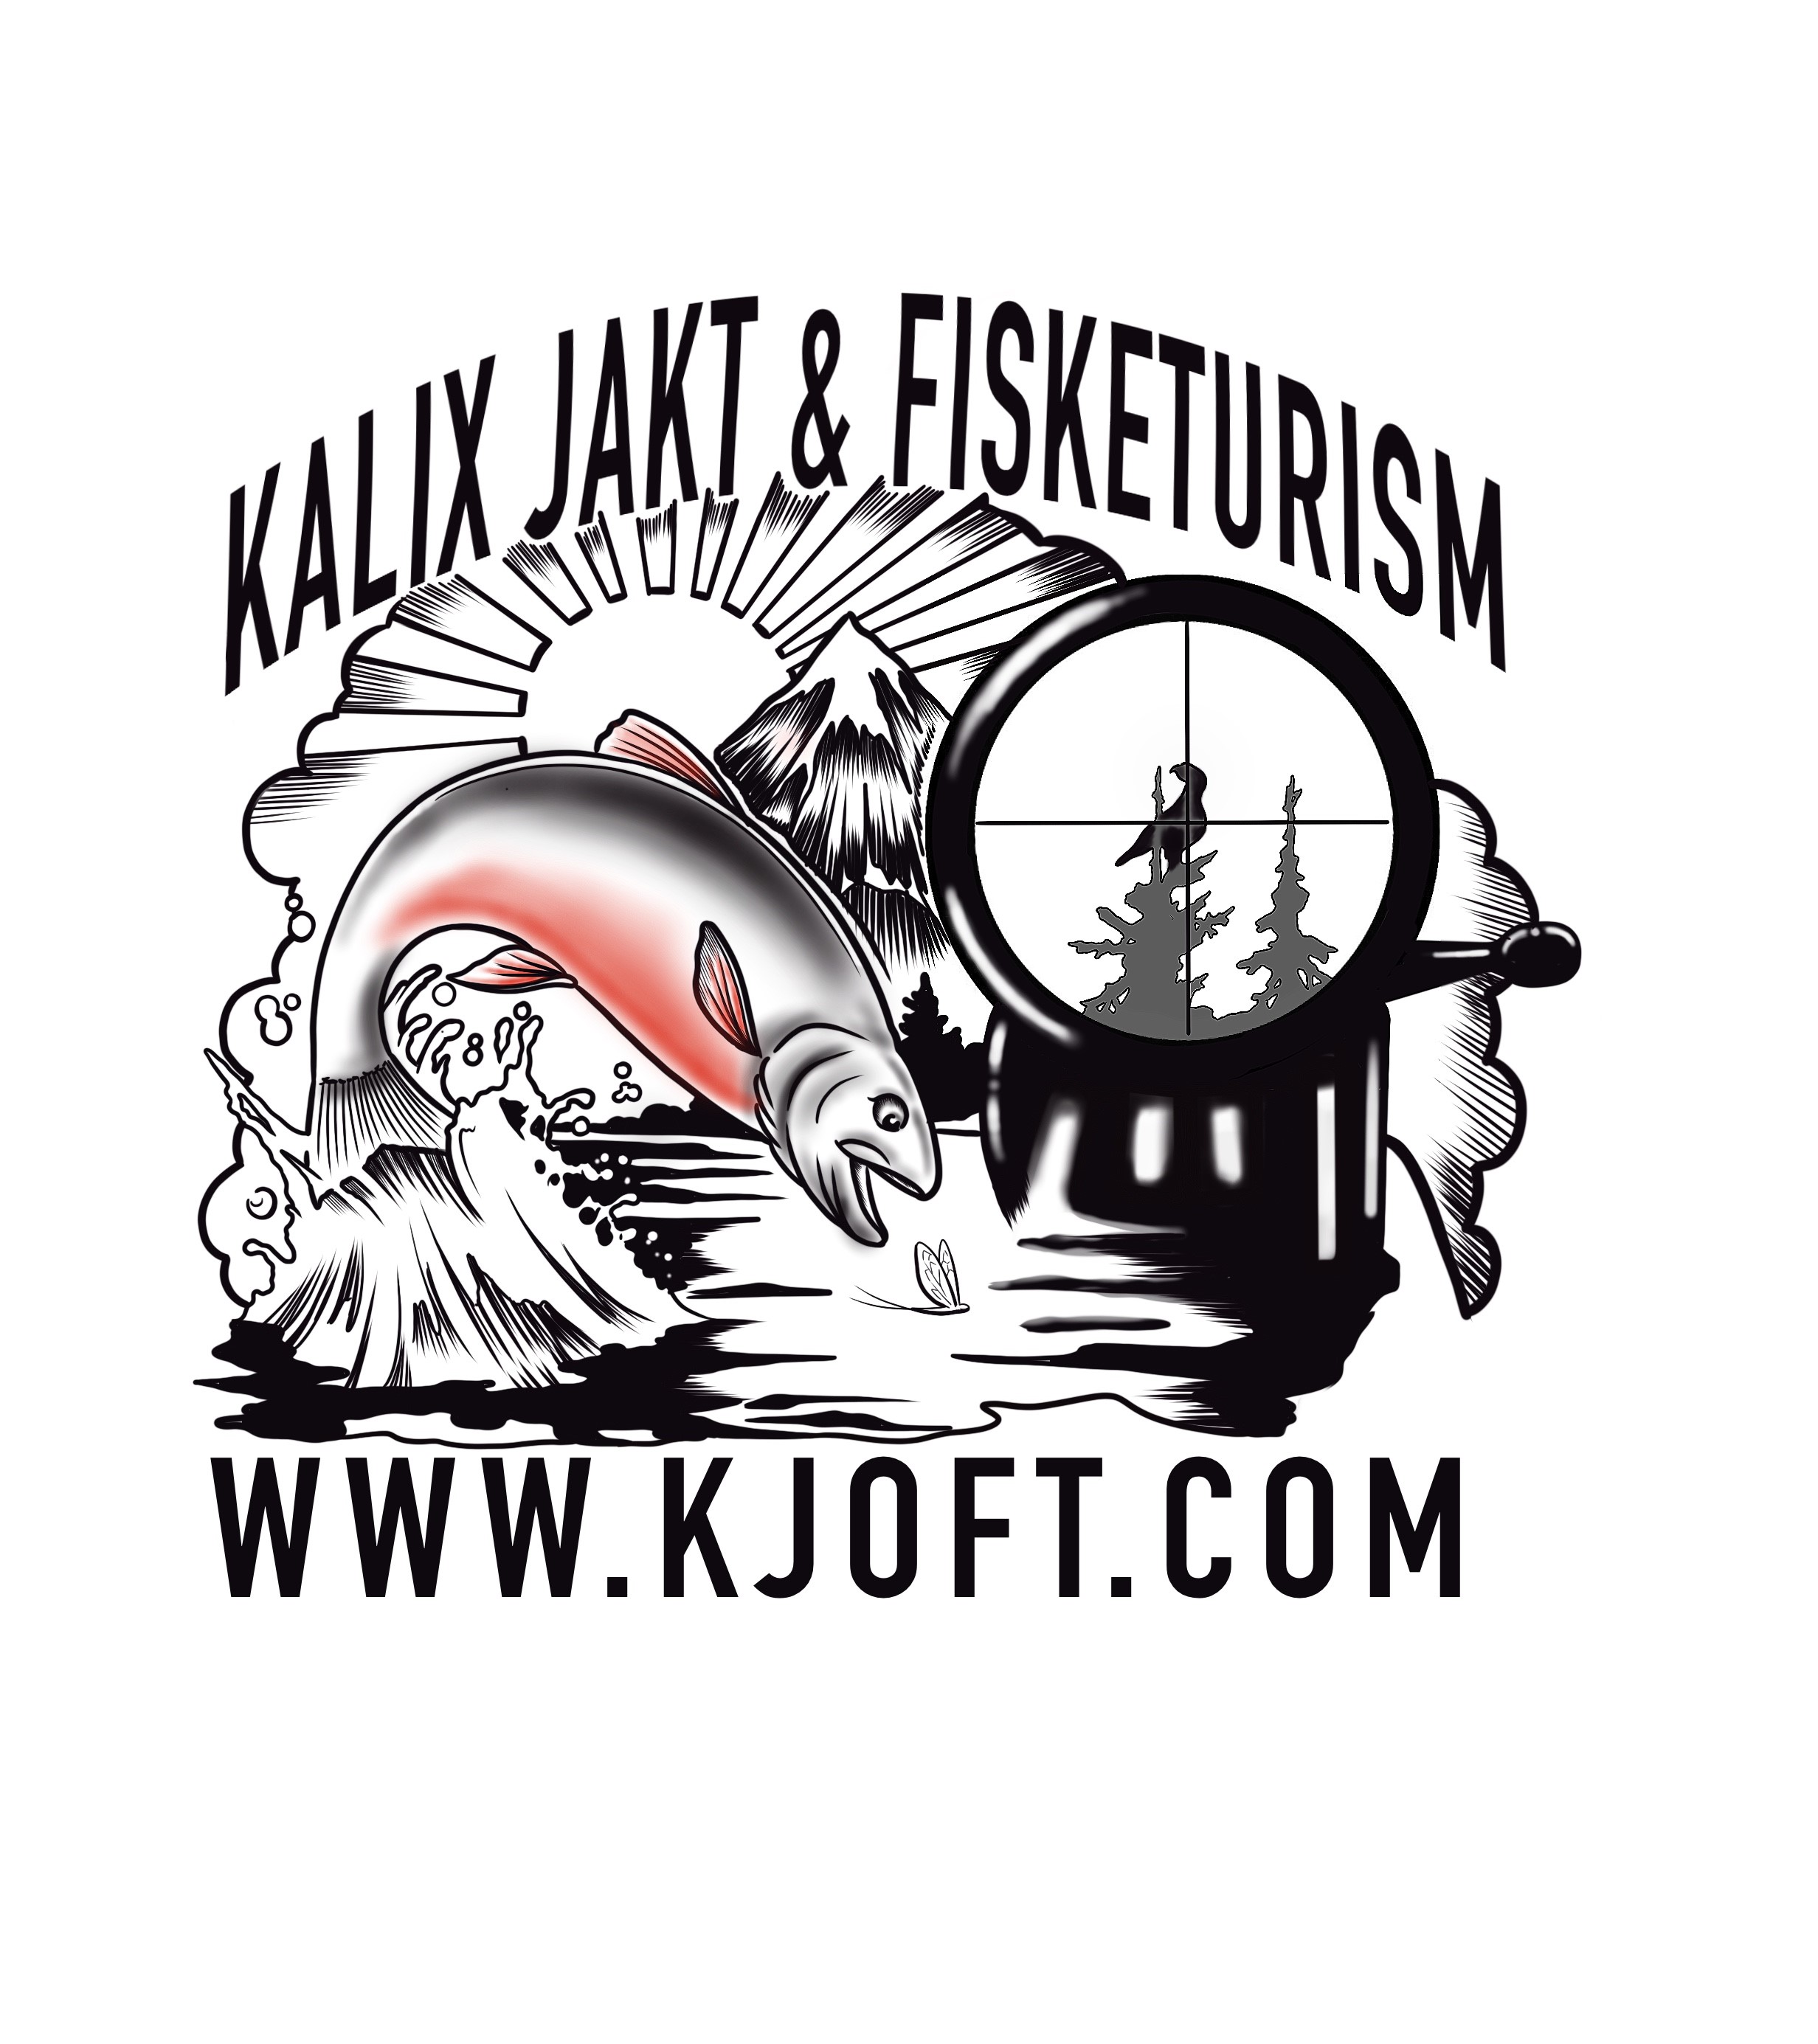 Kalix Jakt & Fisketurism AB